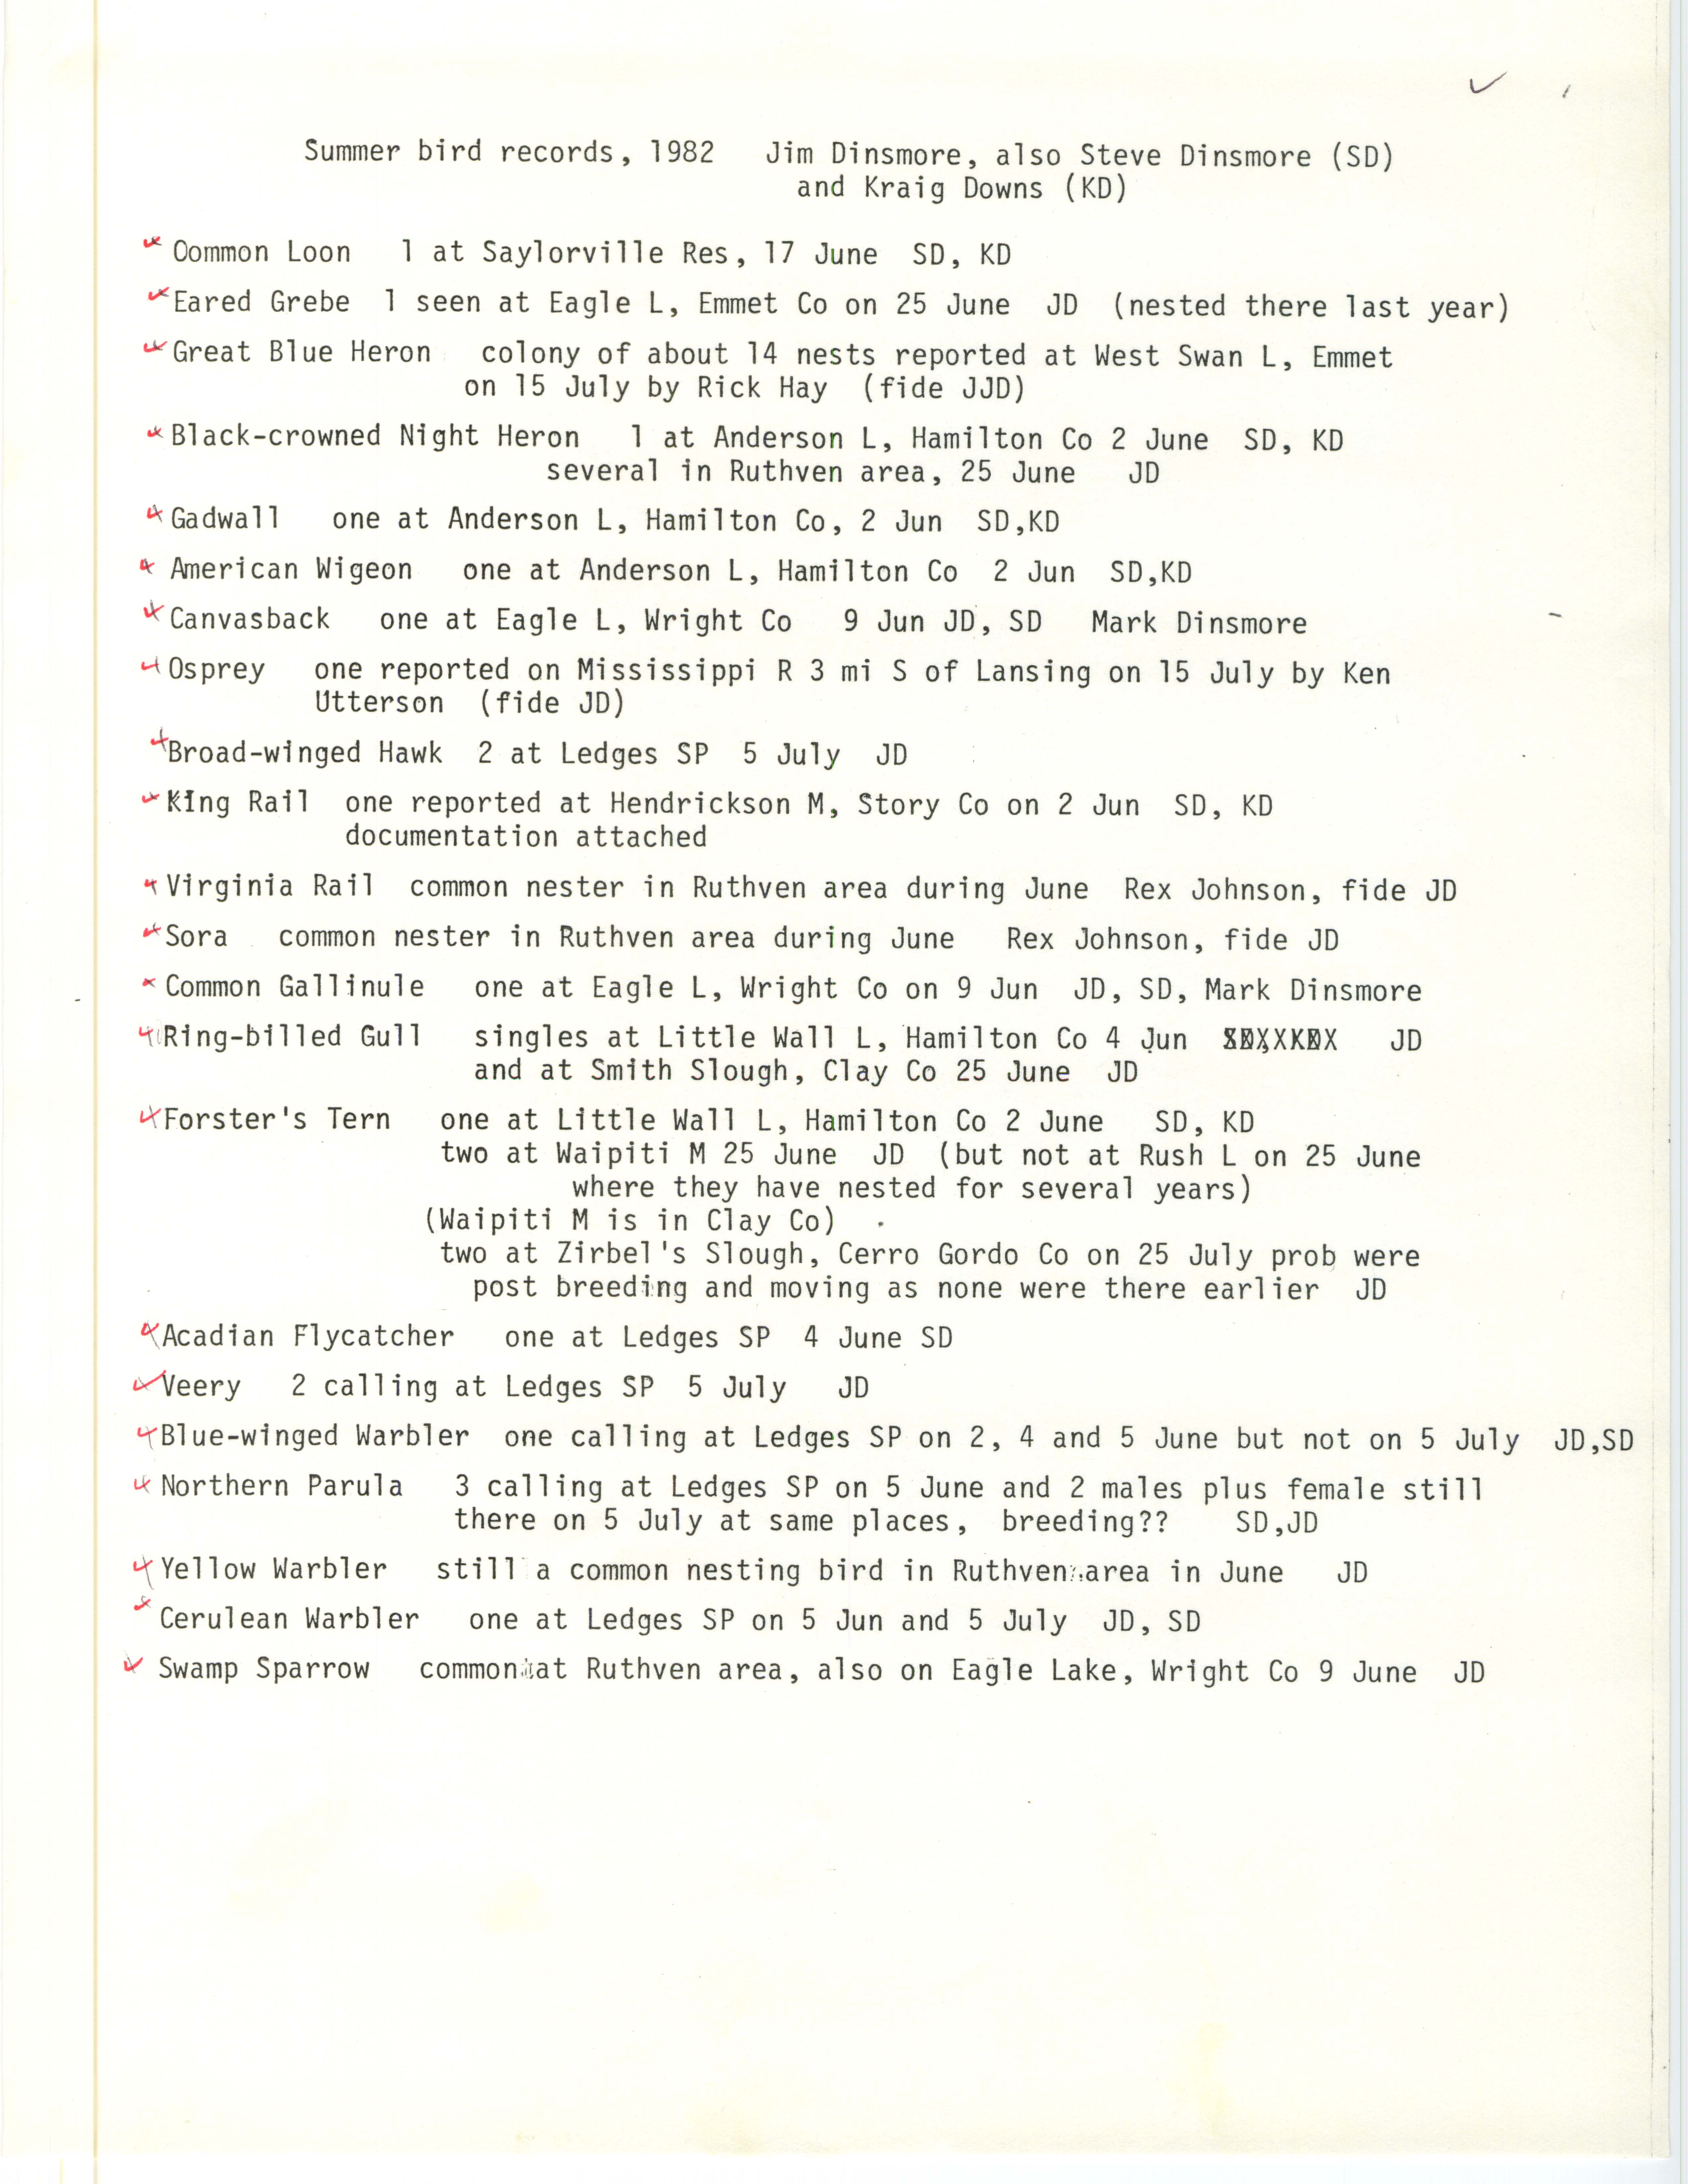 Field notes contributed by James J. Dinsmore, Stephen J. Dinsmore and Kraig Downs regarding summer bird records, 1982 